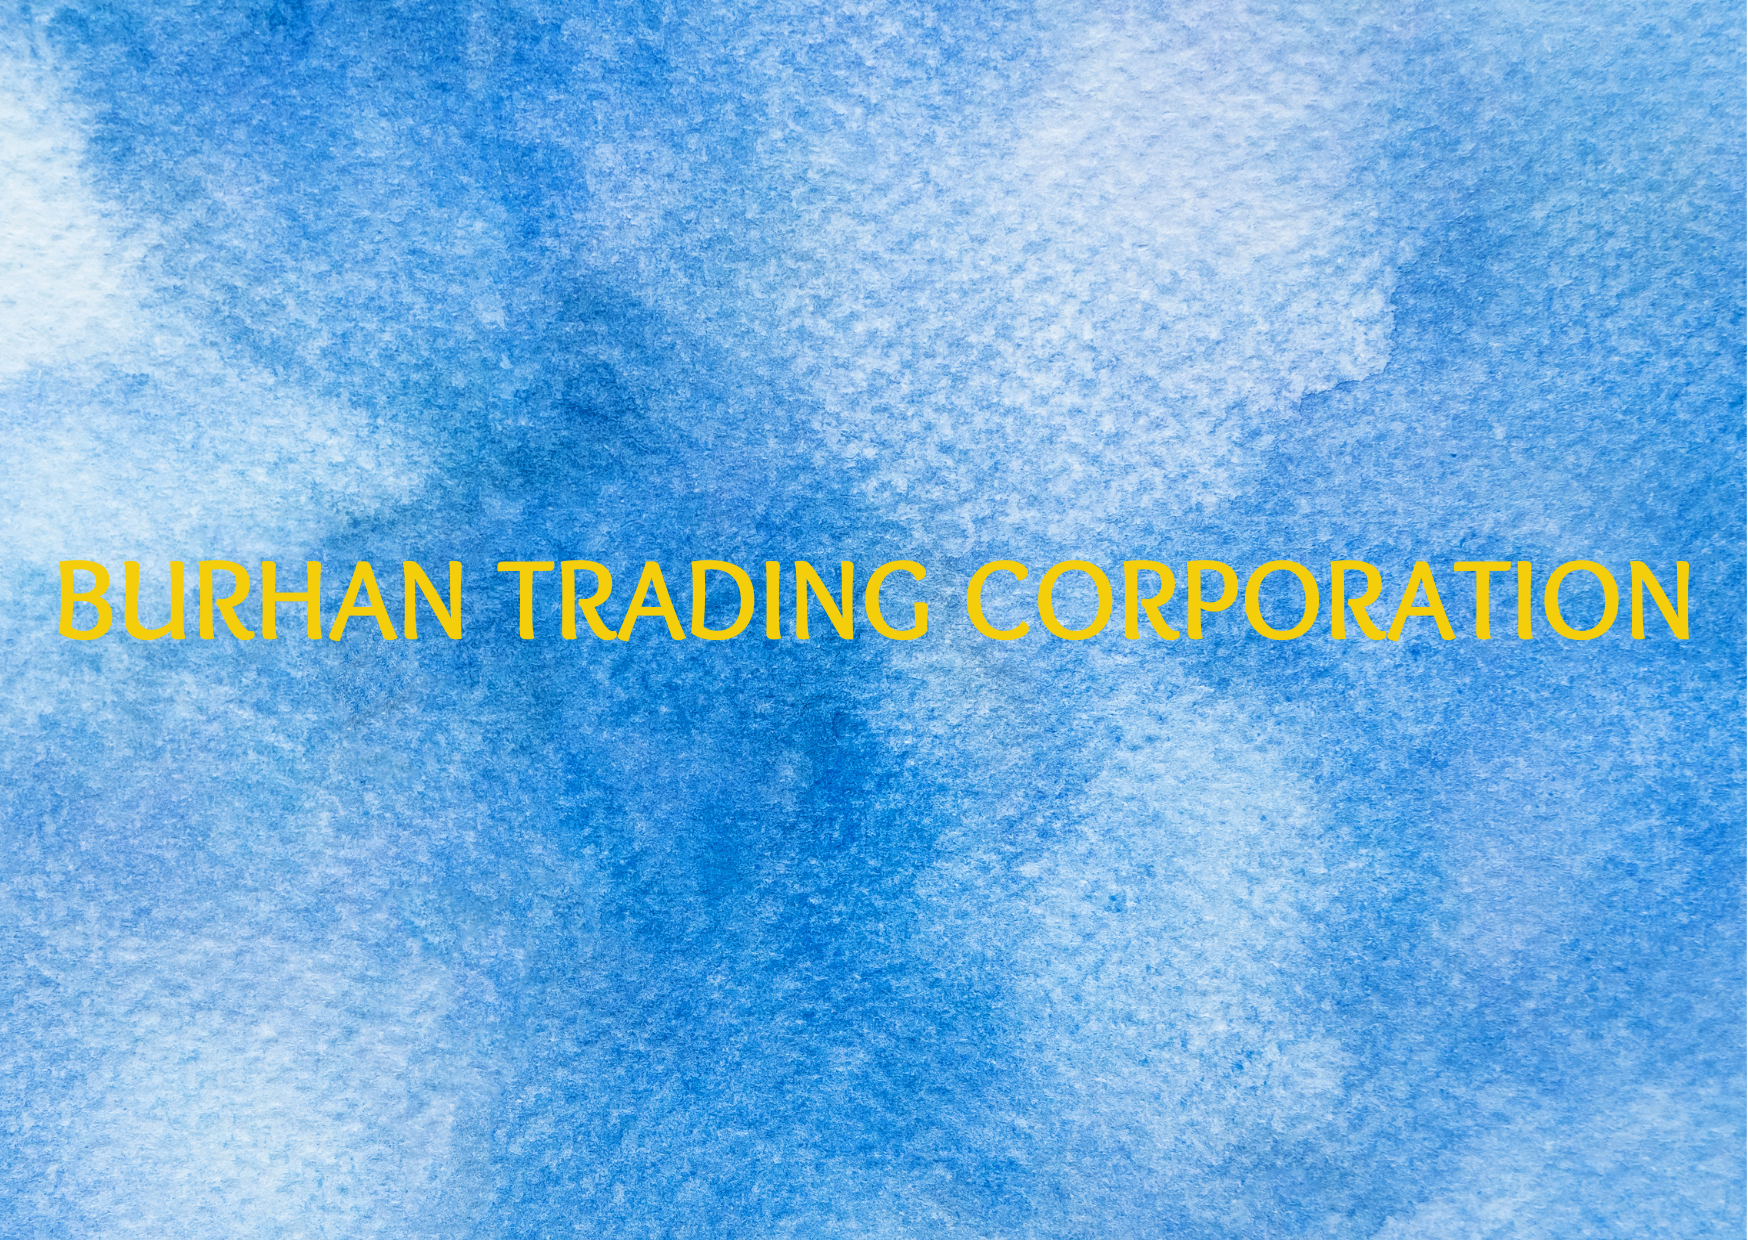 Burhan Trading Corporation